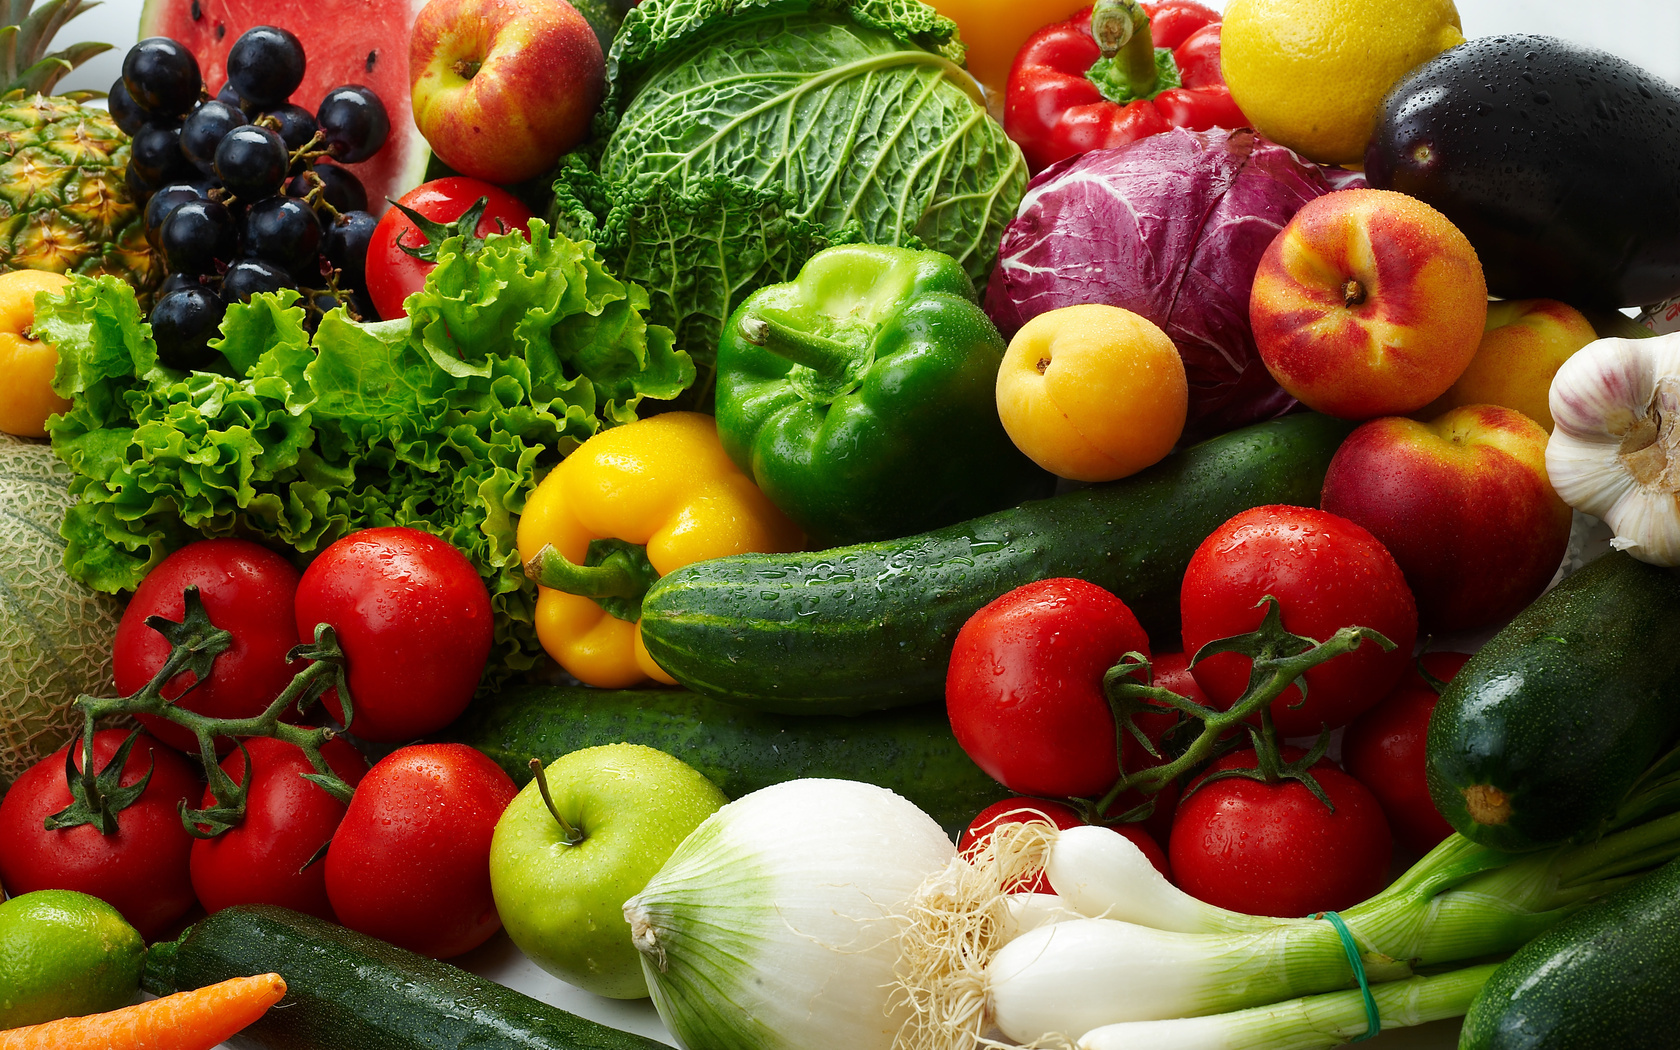 Popular Vegetables Image for Phone